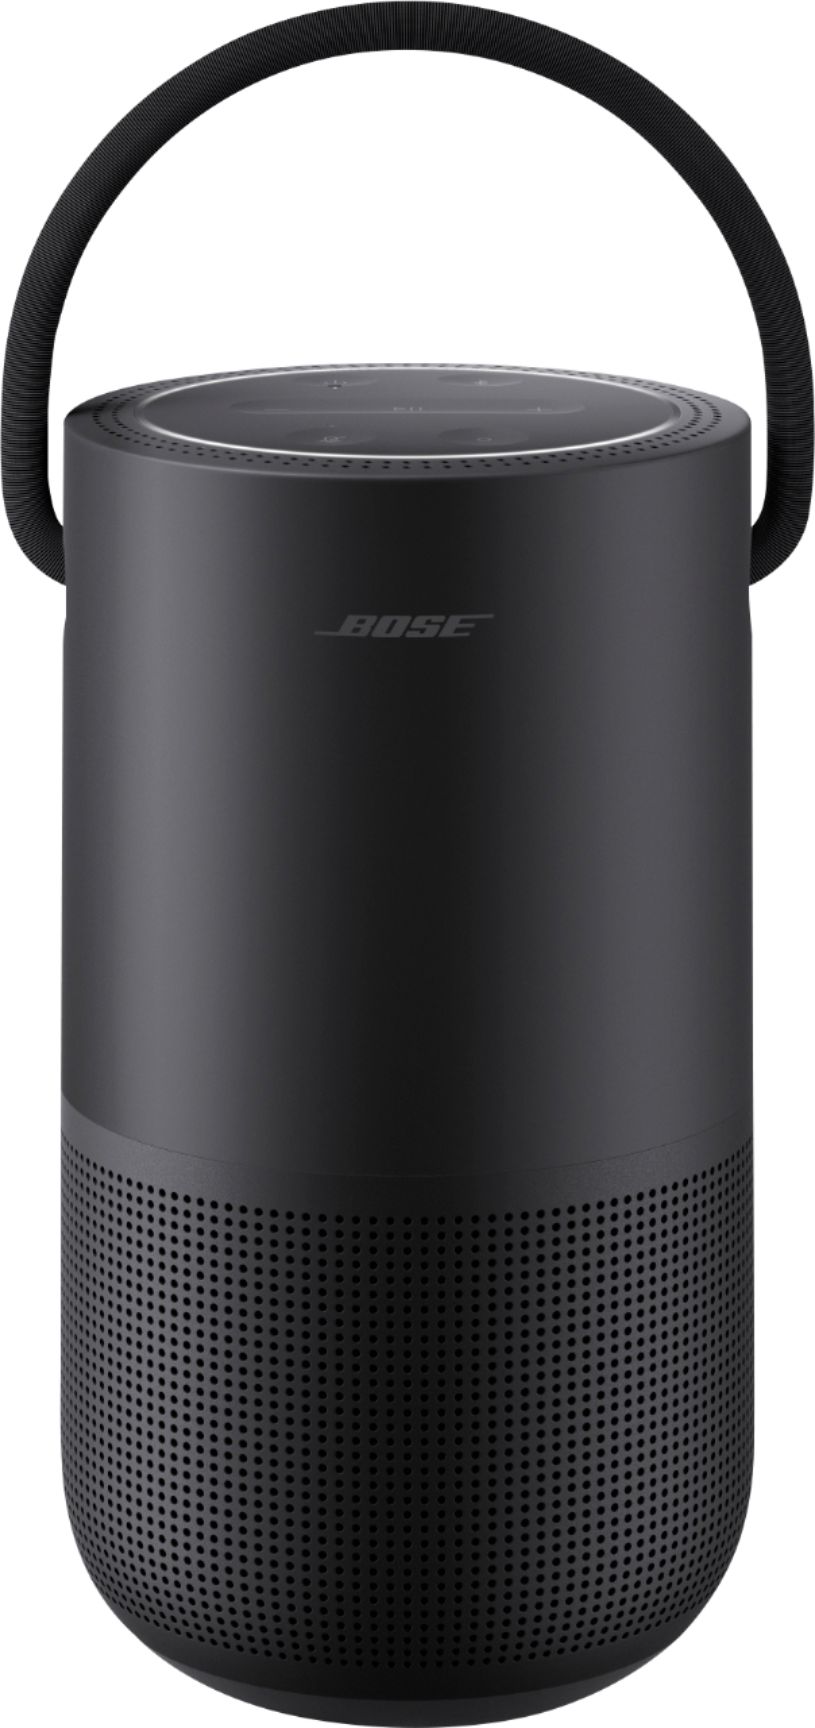 Prime Klassiek Mortal Bose Portable Smart Speaker with built-in WiFi, Bluetooth, Google Assistant  and Alexa Voice Control Triple Black 829393-1100 - Best Buy